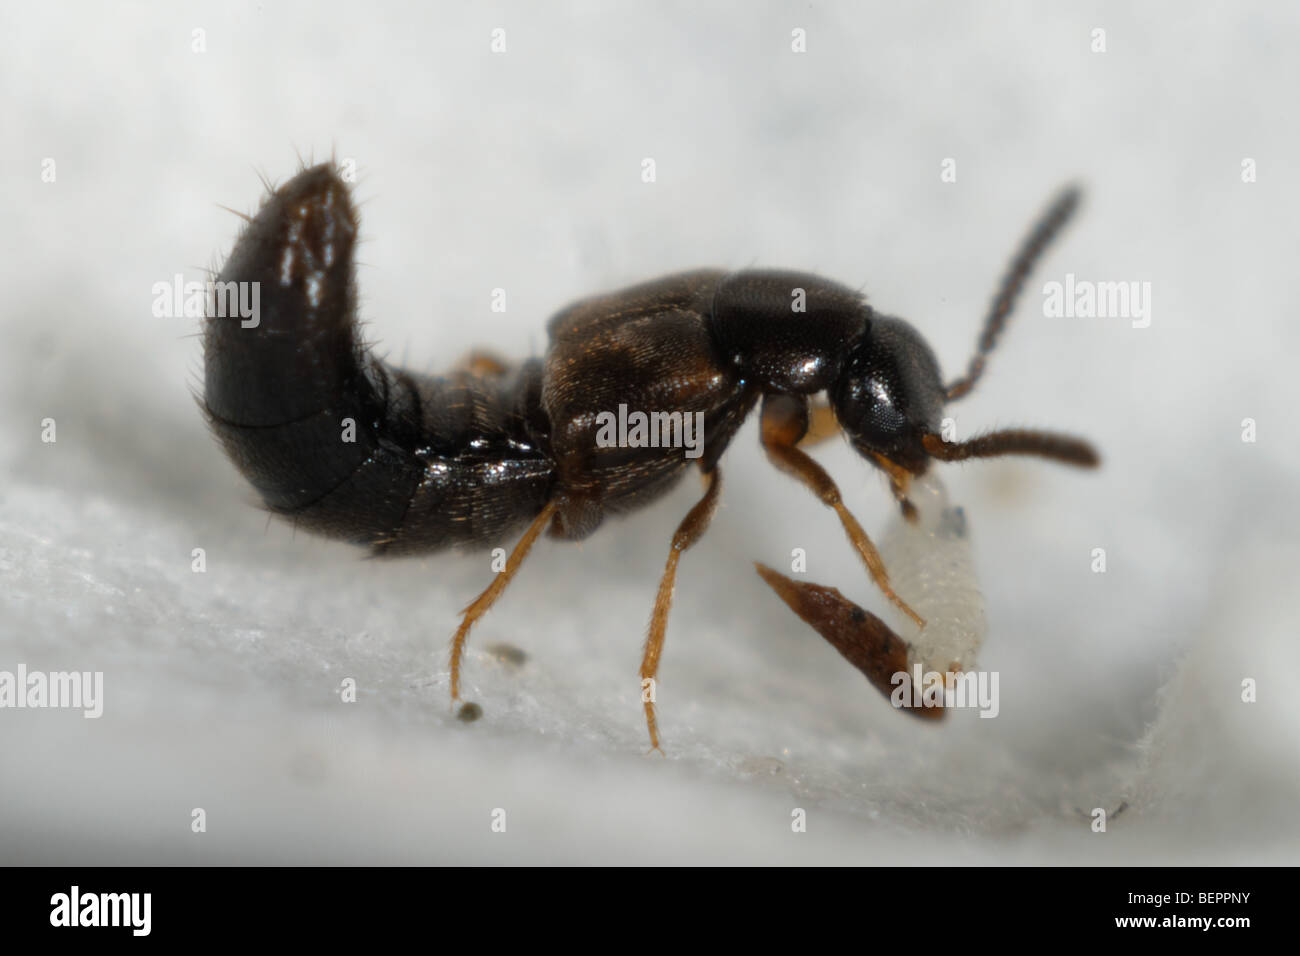 a-rove-beetle-atheta-coriaria-feeding-on-a-blackberry-leaf-midge-larva-BEPPNY.jpg